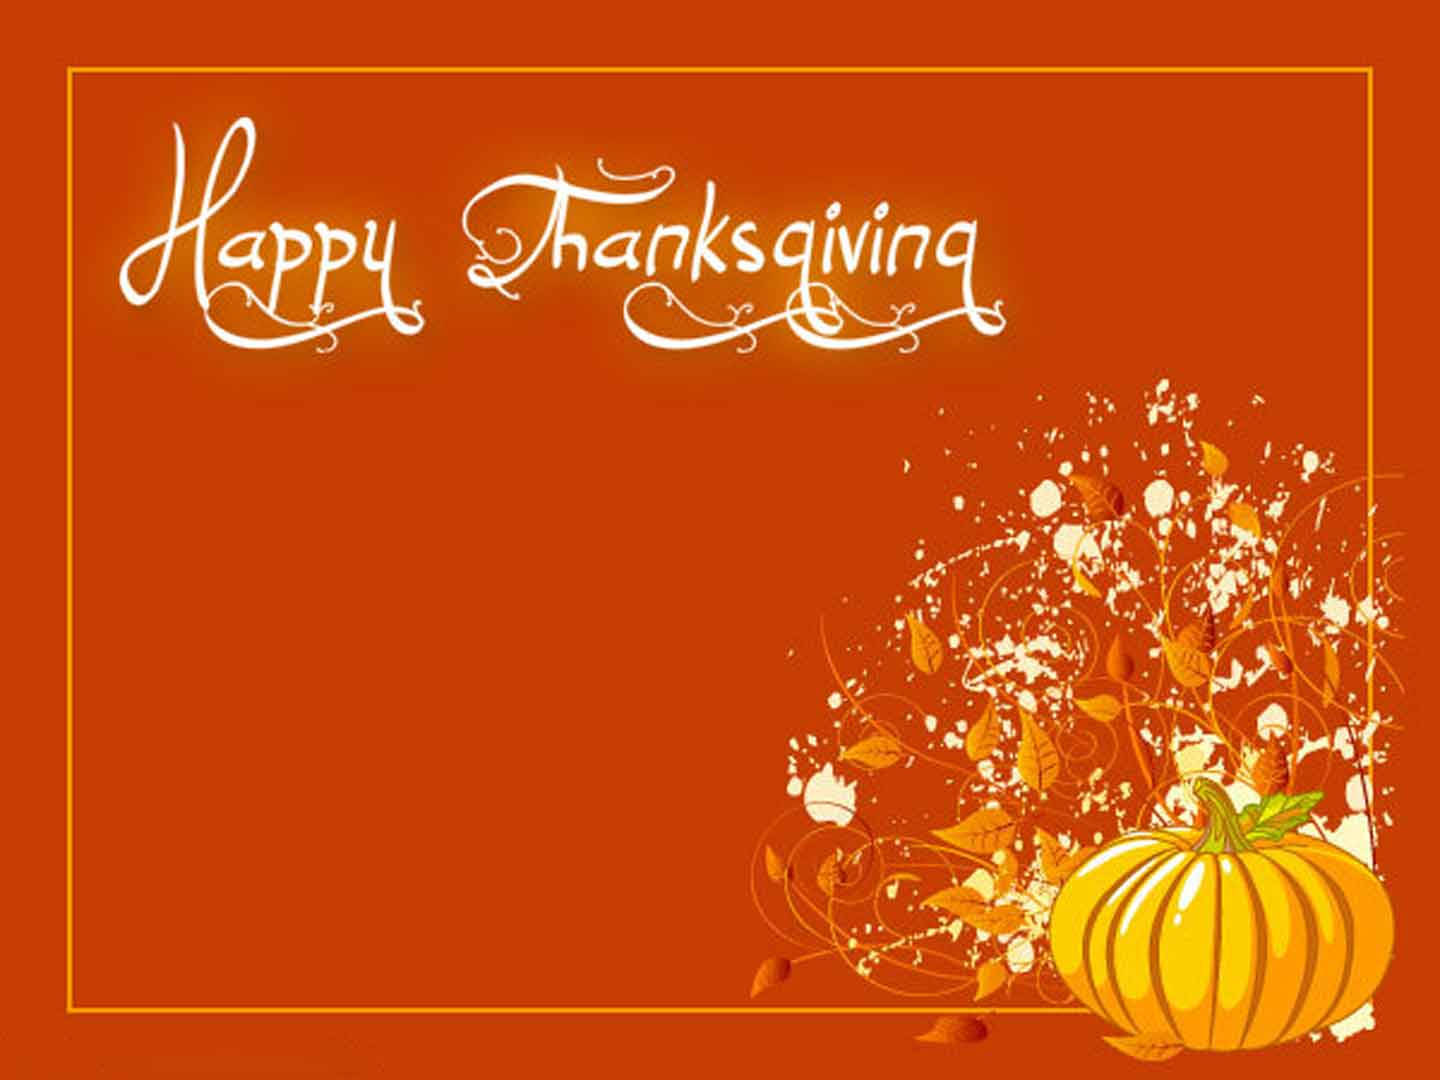 Thanksgiving Greetings With Glowing Pumpkin Wallpaper